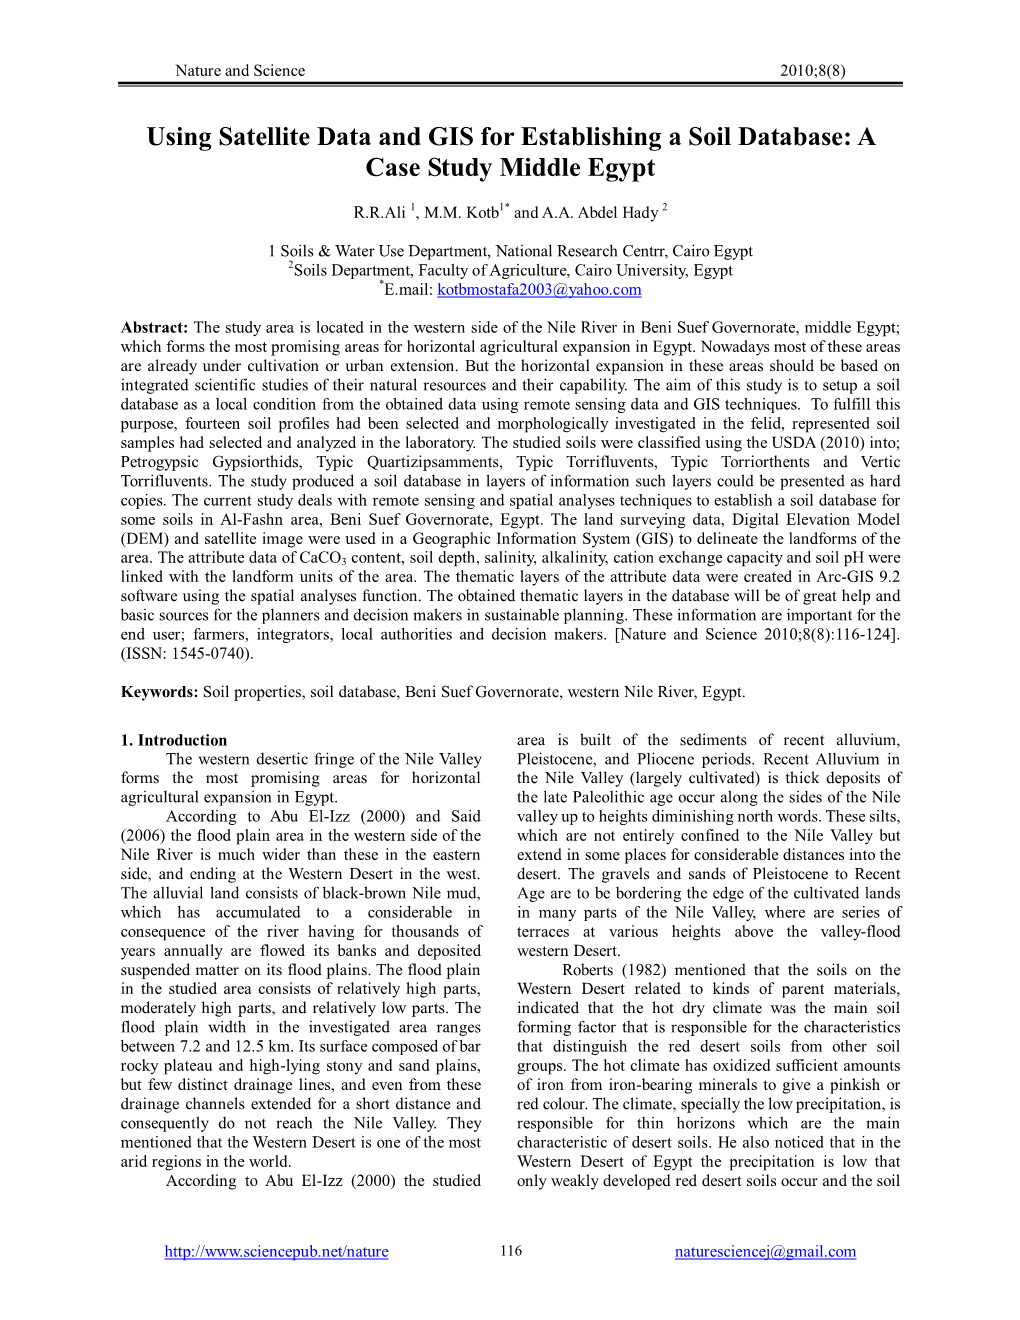 Using Satellite Data and GIS for Establishing a Soil Database: a Case Study Middle Egypt